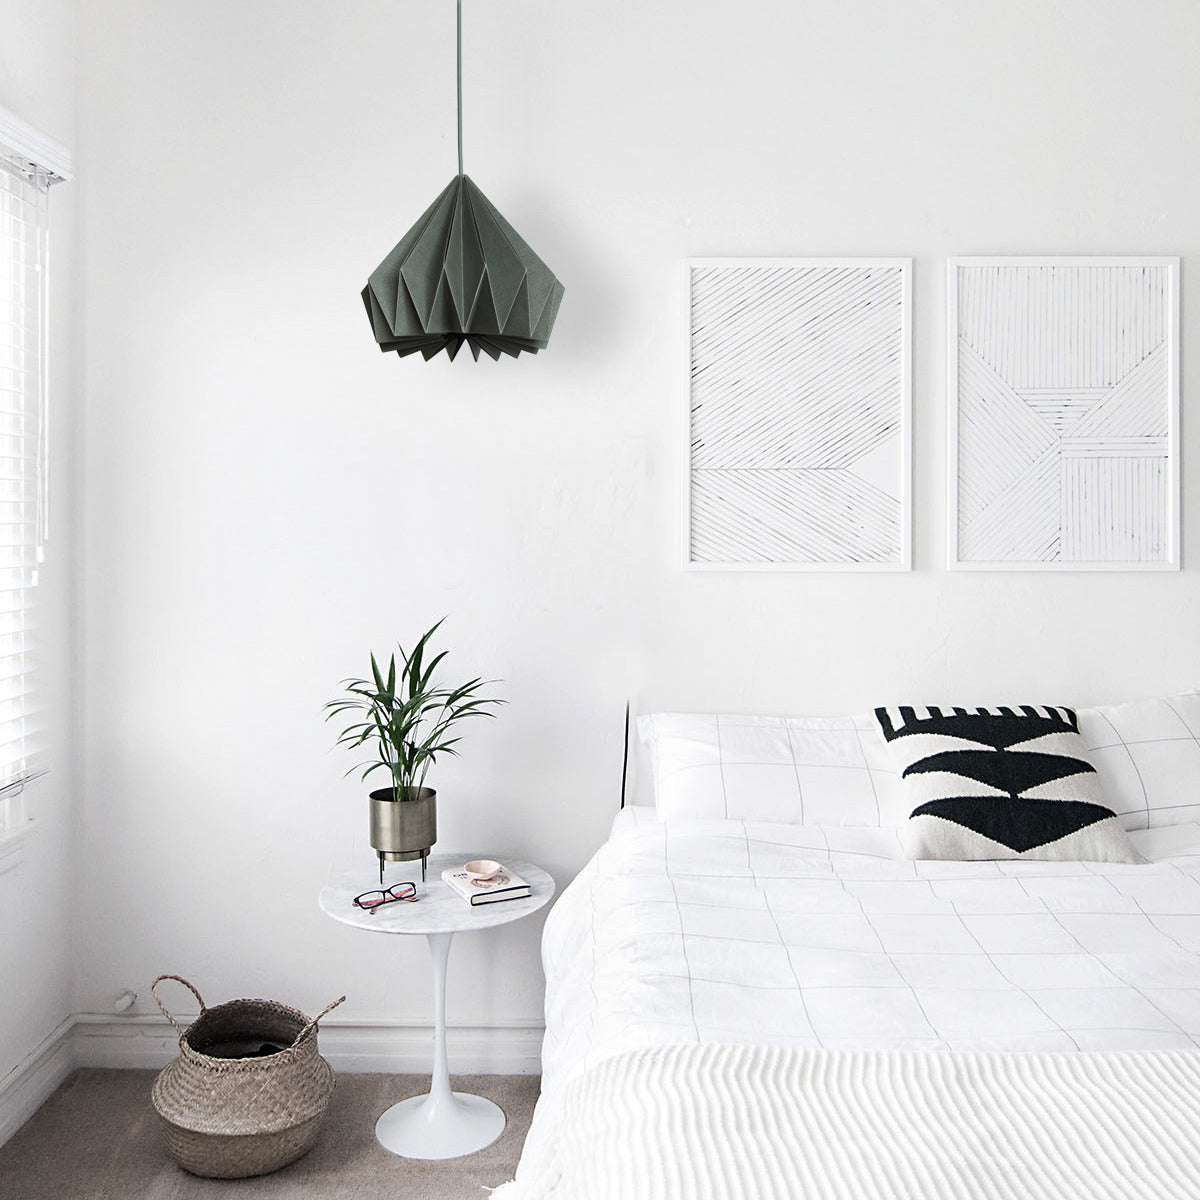 Home decor ideas paper origami lamp shade buy now Interior Design